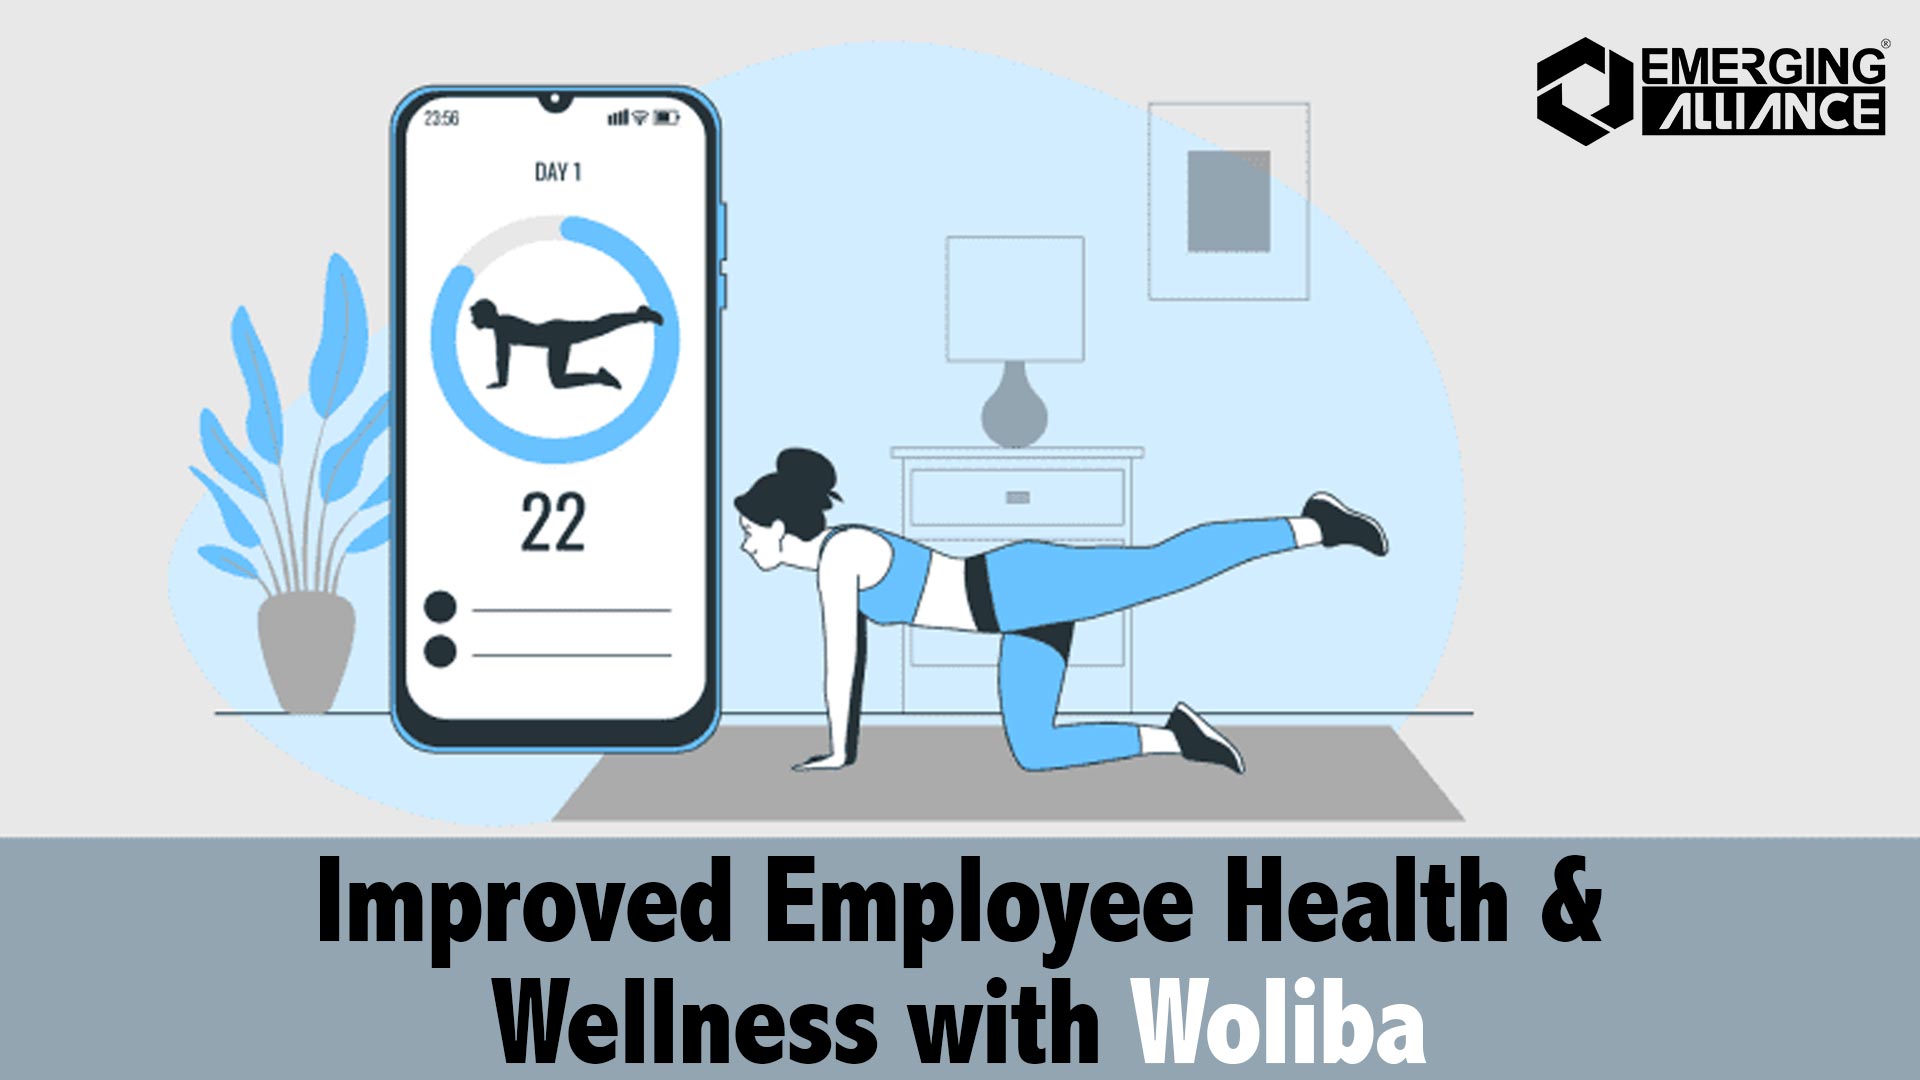 Employee Health & Wellness with Woliba